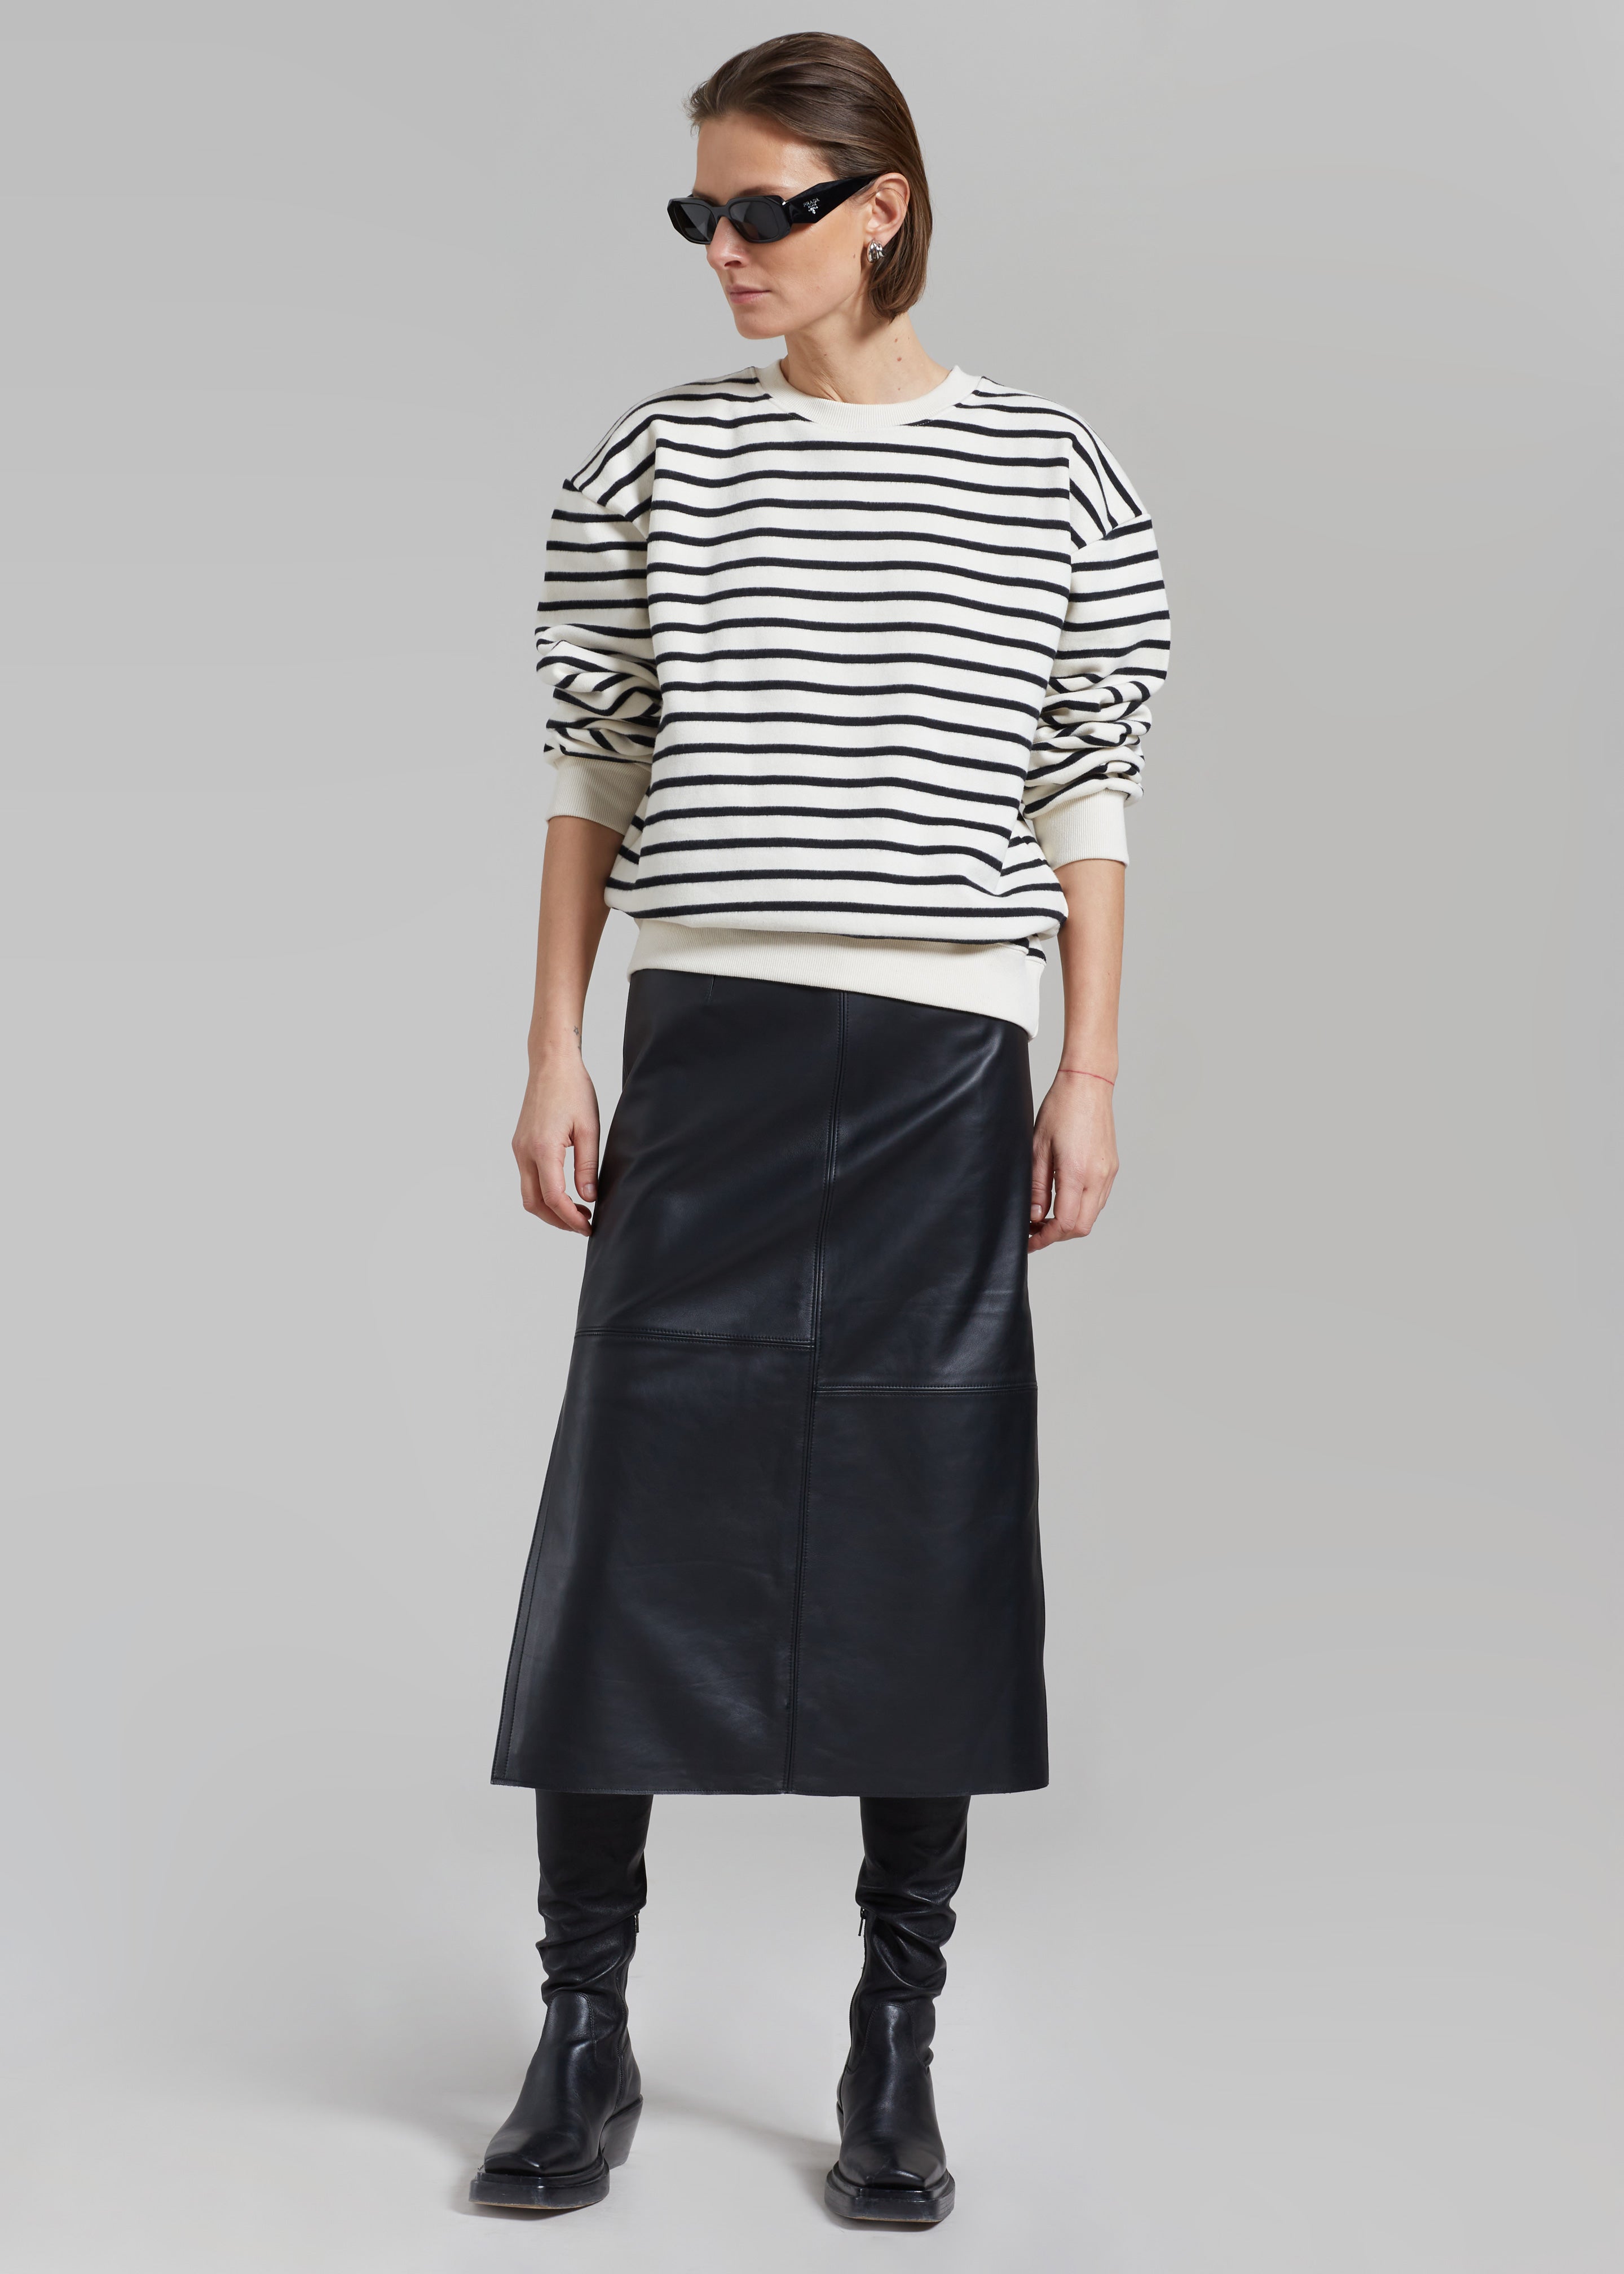 Saint Stripe Sweater - Black/White Stripe - 2